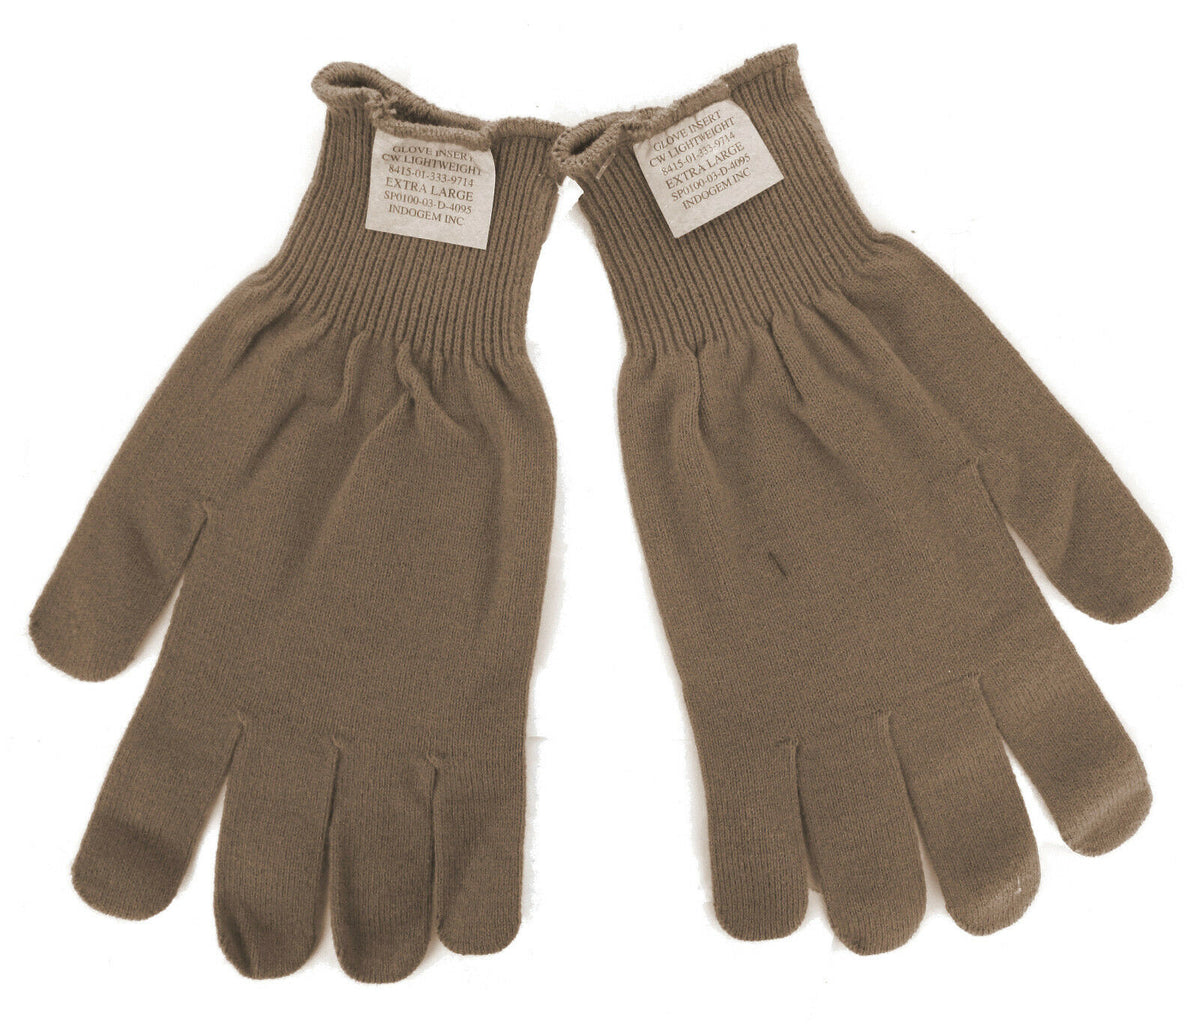 NEW Unissued Military Surplus - CW Lightweight Glove Inserts - BROWN - Size XL